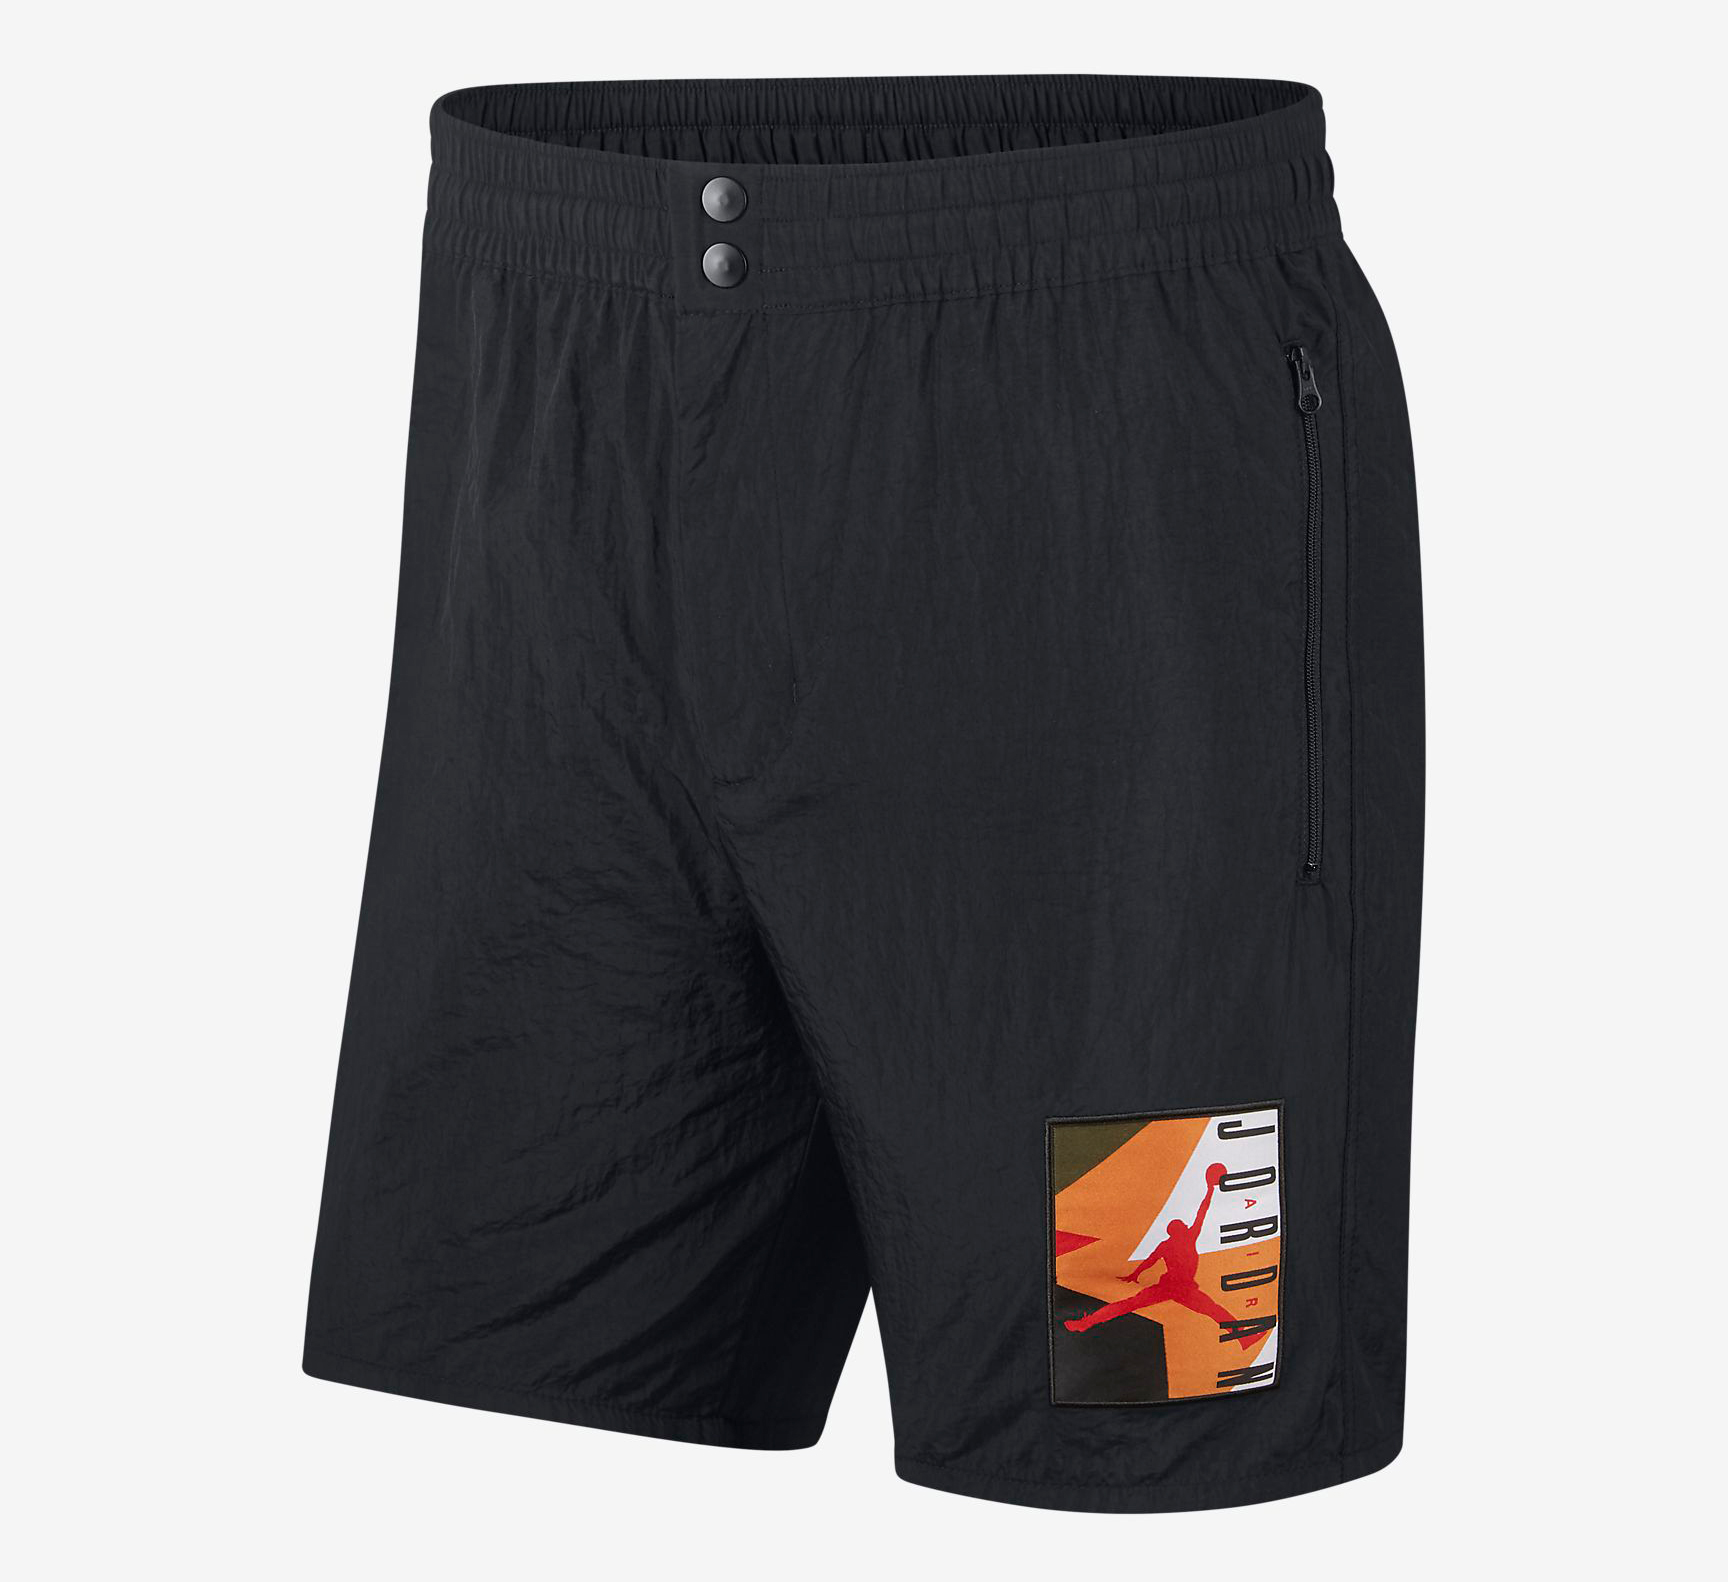 Jordan 7 Low NRG Shirt and Shorts Match | SportFits.com